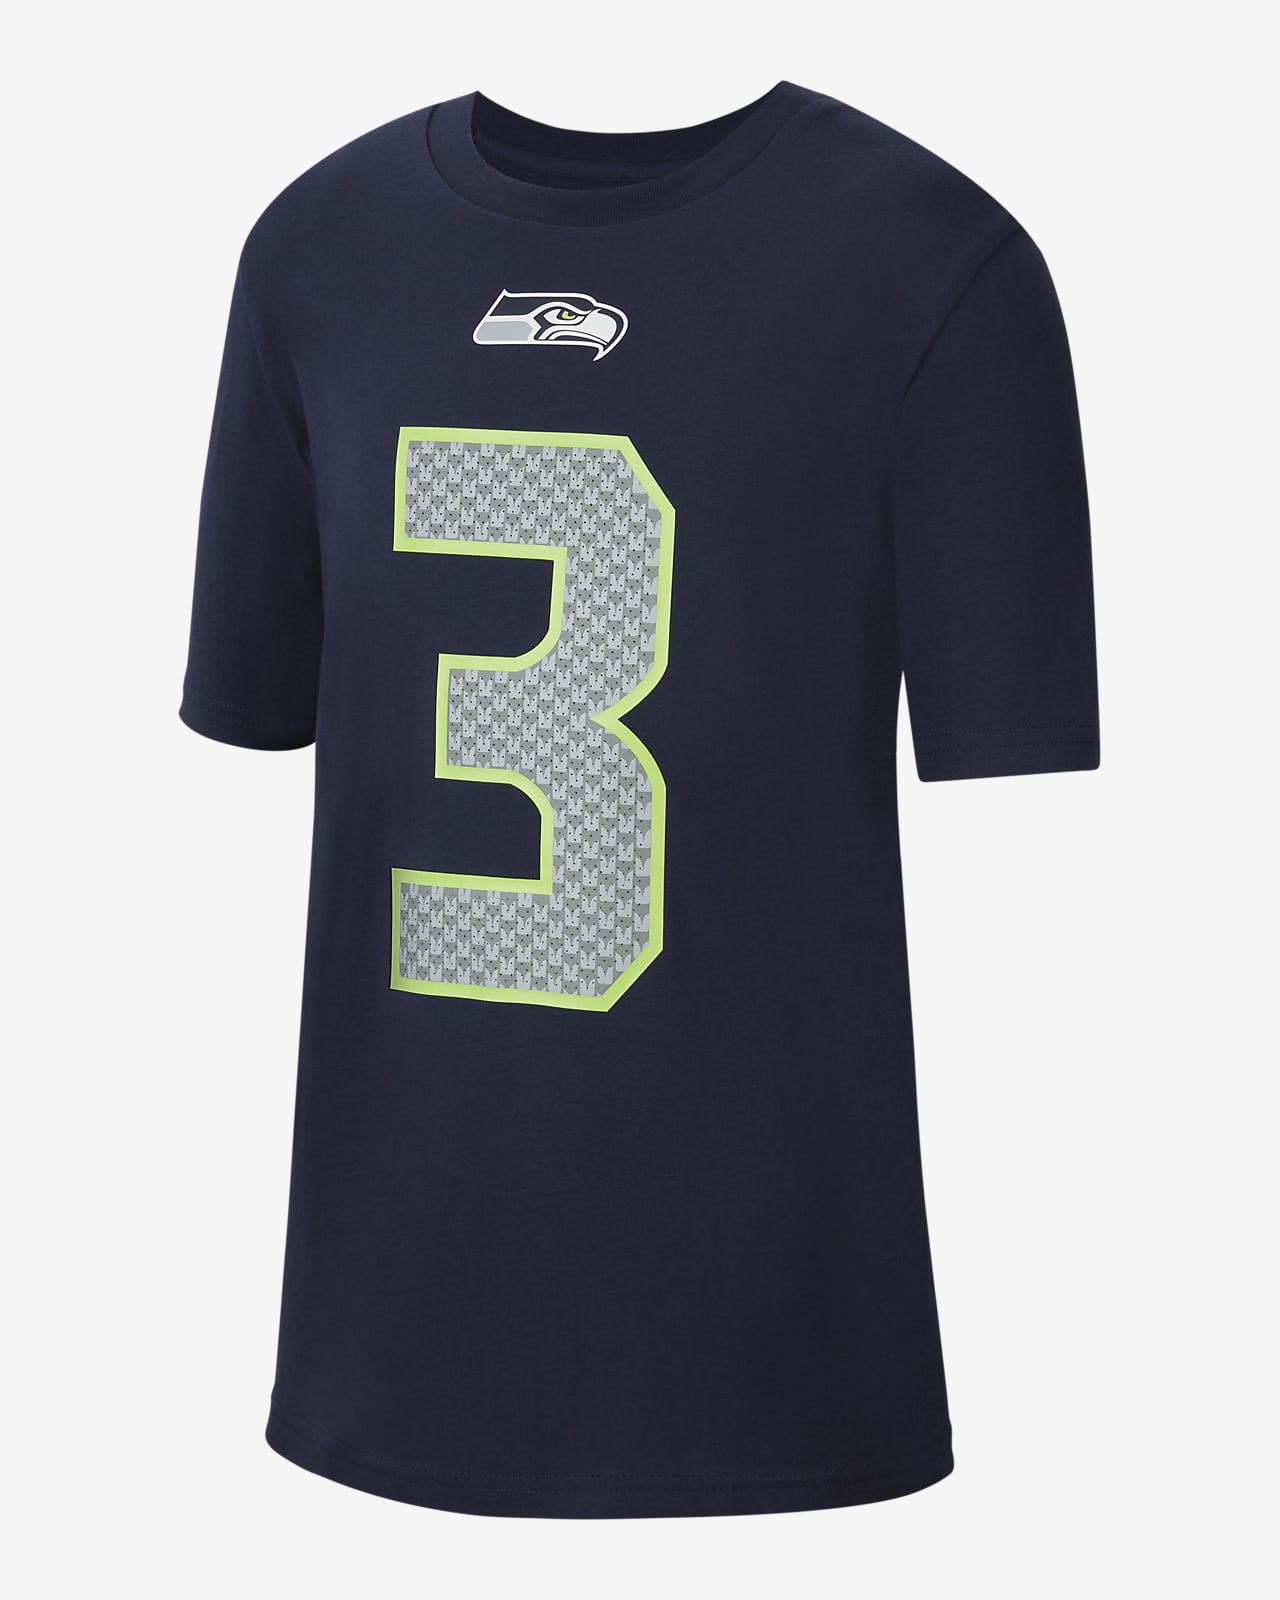 T-shirt Nike (NFL Seattle Seahawks) för ungdom